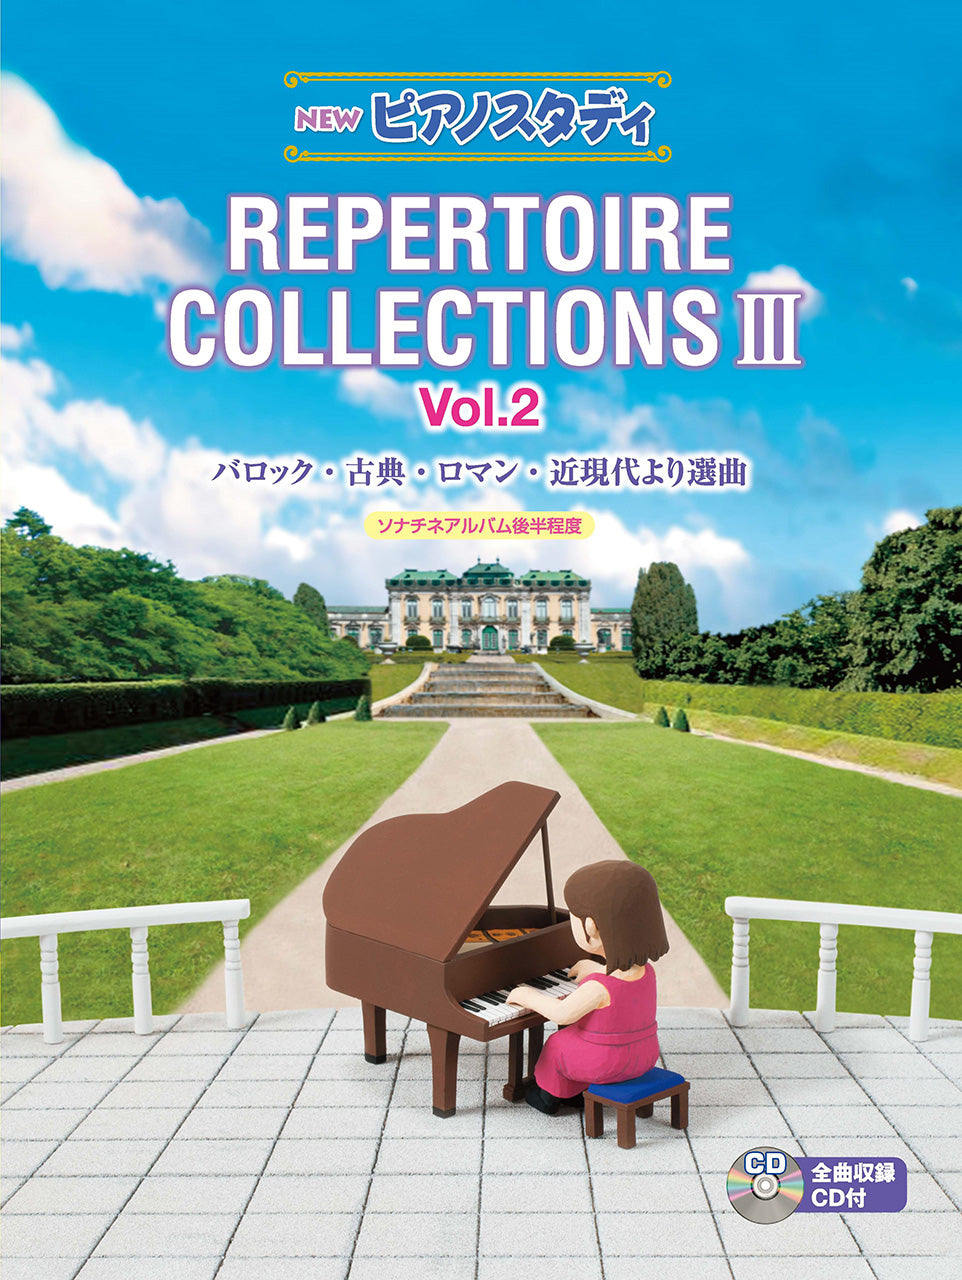 NEW ピアノスタディ レパートリーコレクションズIII Vol.2(CD付 